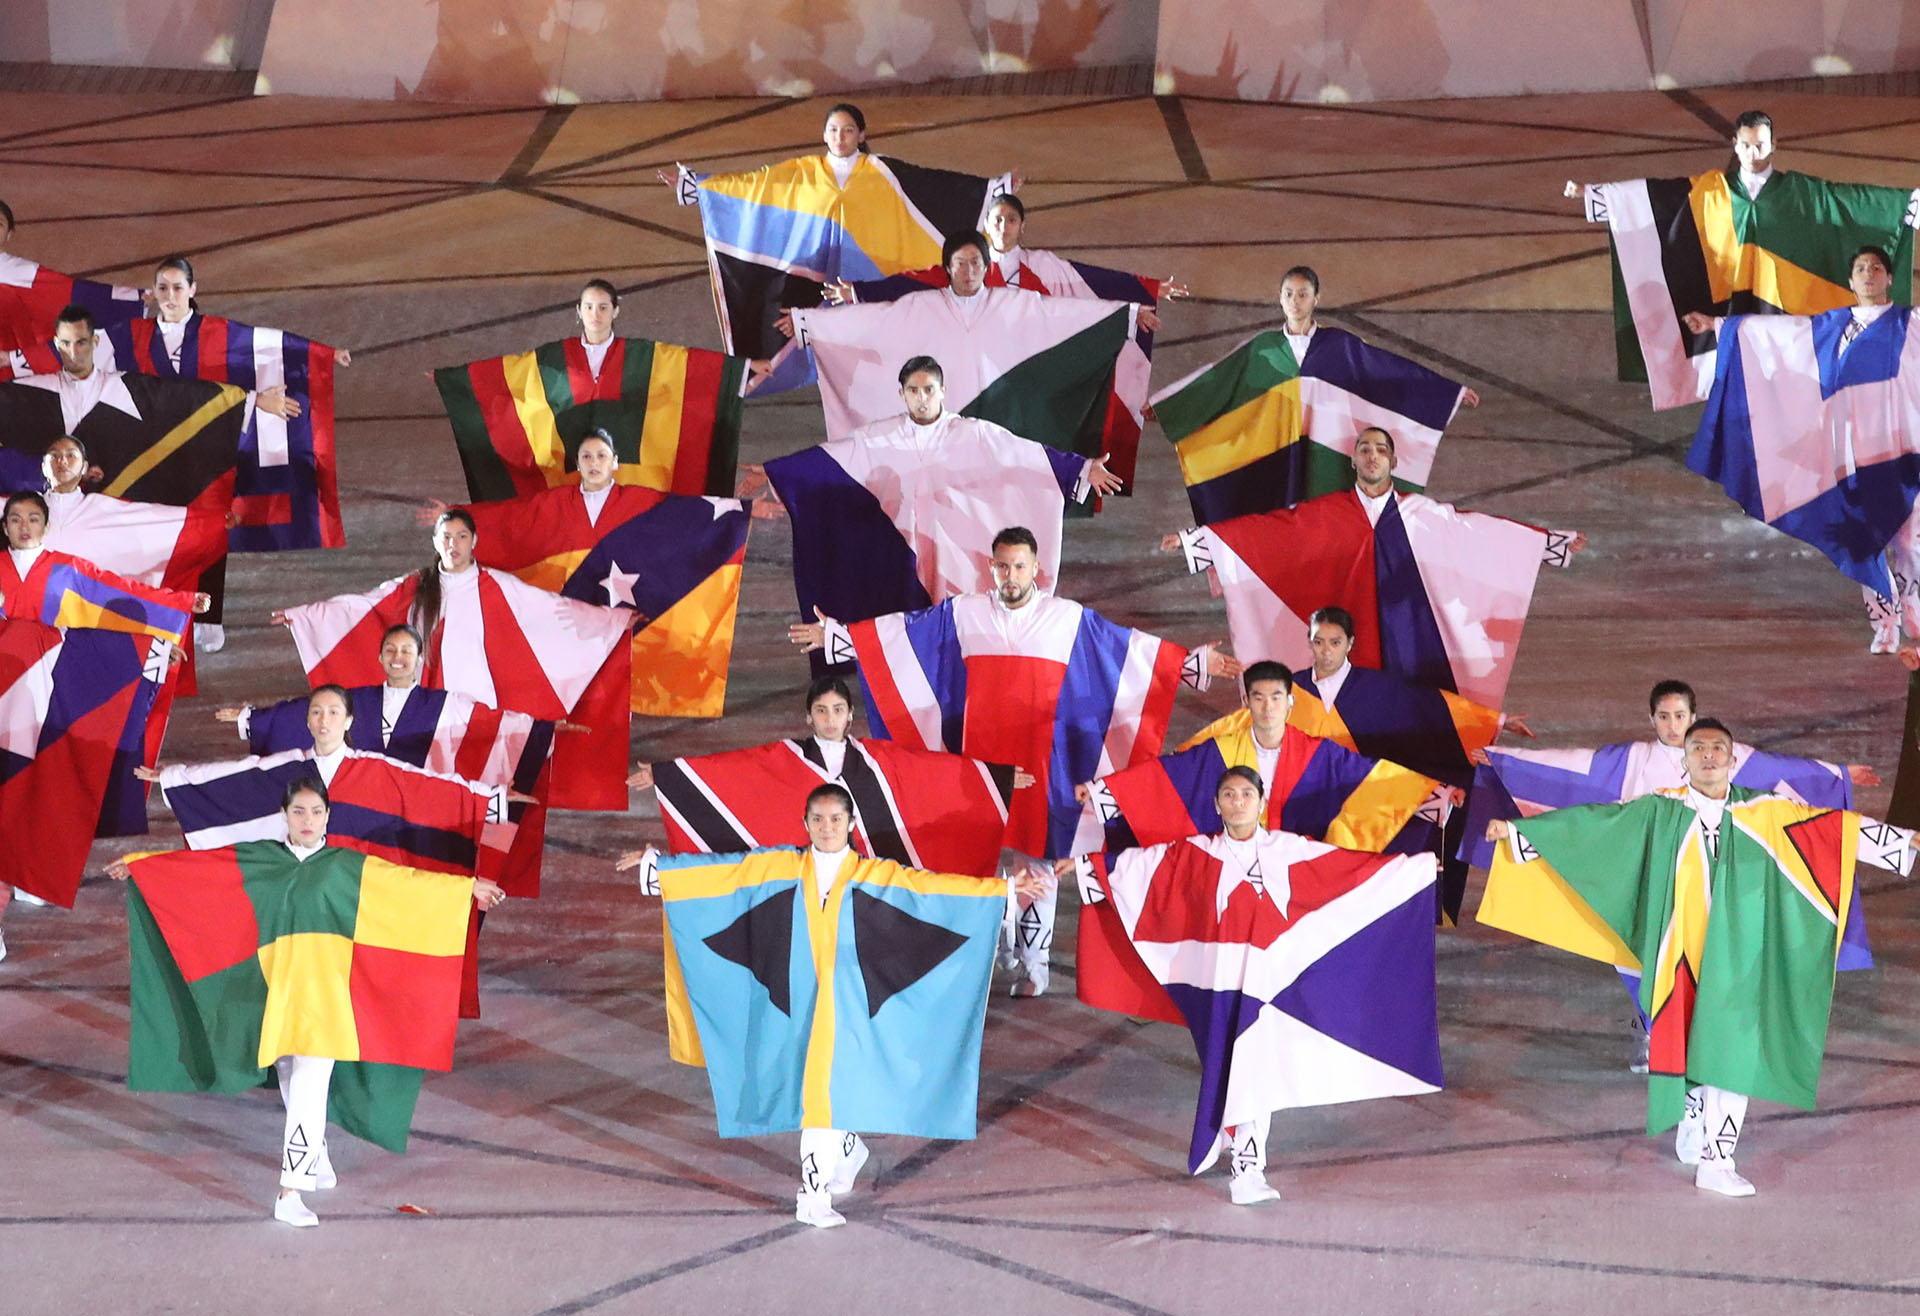 XVIII Pan American Games - Lima 2019 - Opening Ceremony - Estadio Nacional, Lima, Peru - July 26, 2019. Dancers perform during the opening ceremony. REUTERS/Sergio Moraes